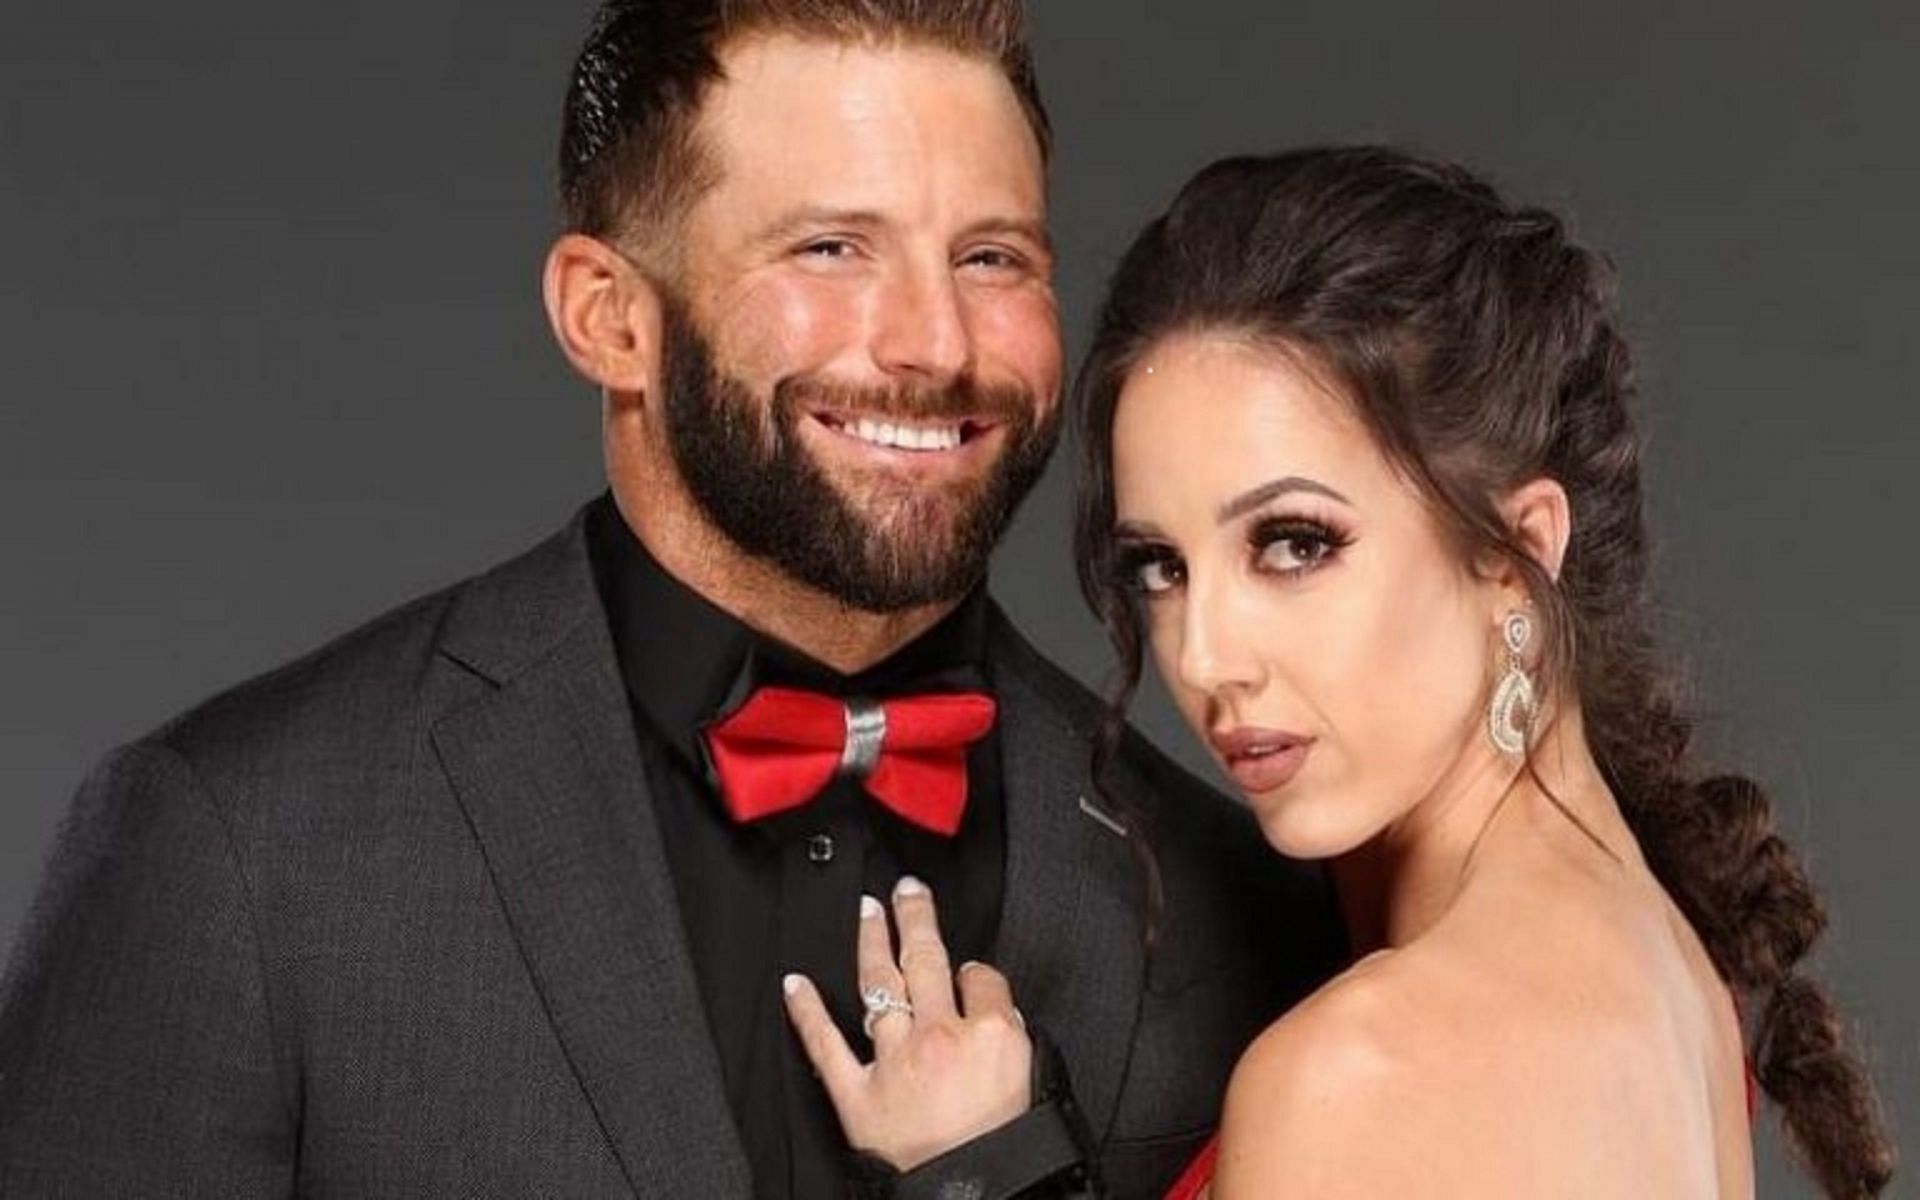 Former WWE stars Matt Cardona and Chelsea Green married in 2019!